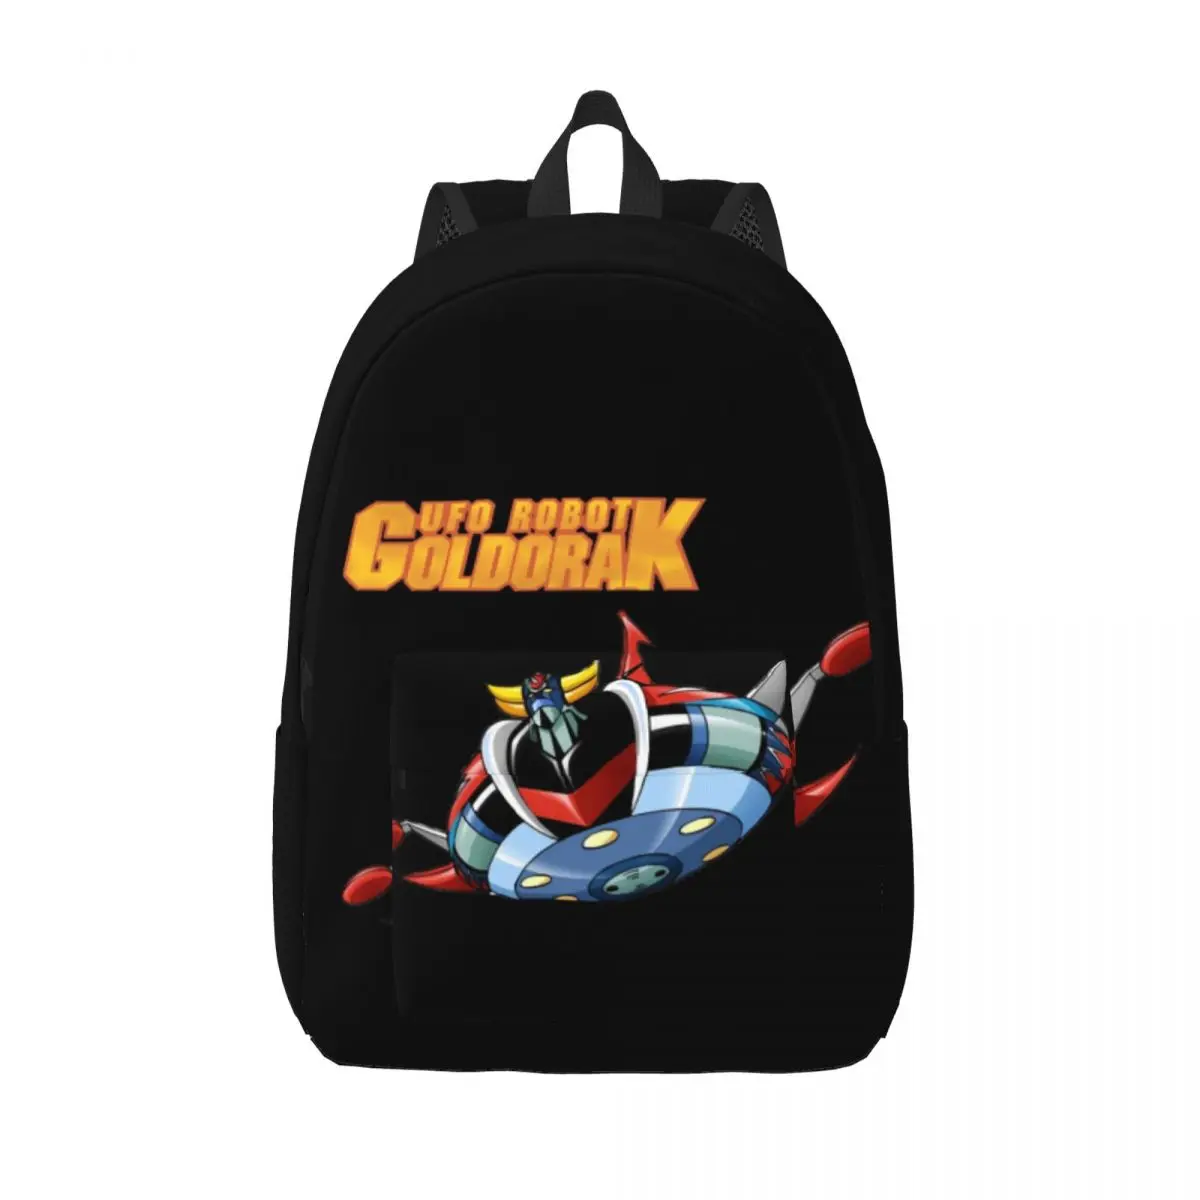 

Goldorak UFO Robot Classic Canvas Backpacks for Men Women Water Resistant School College UFO Robot Bag Print Bookbag